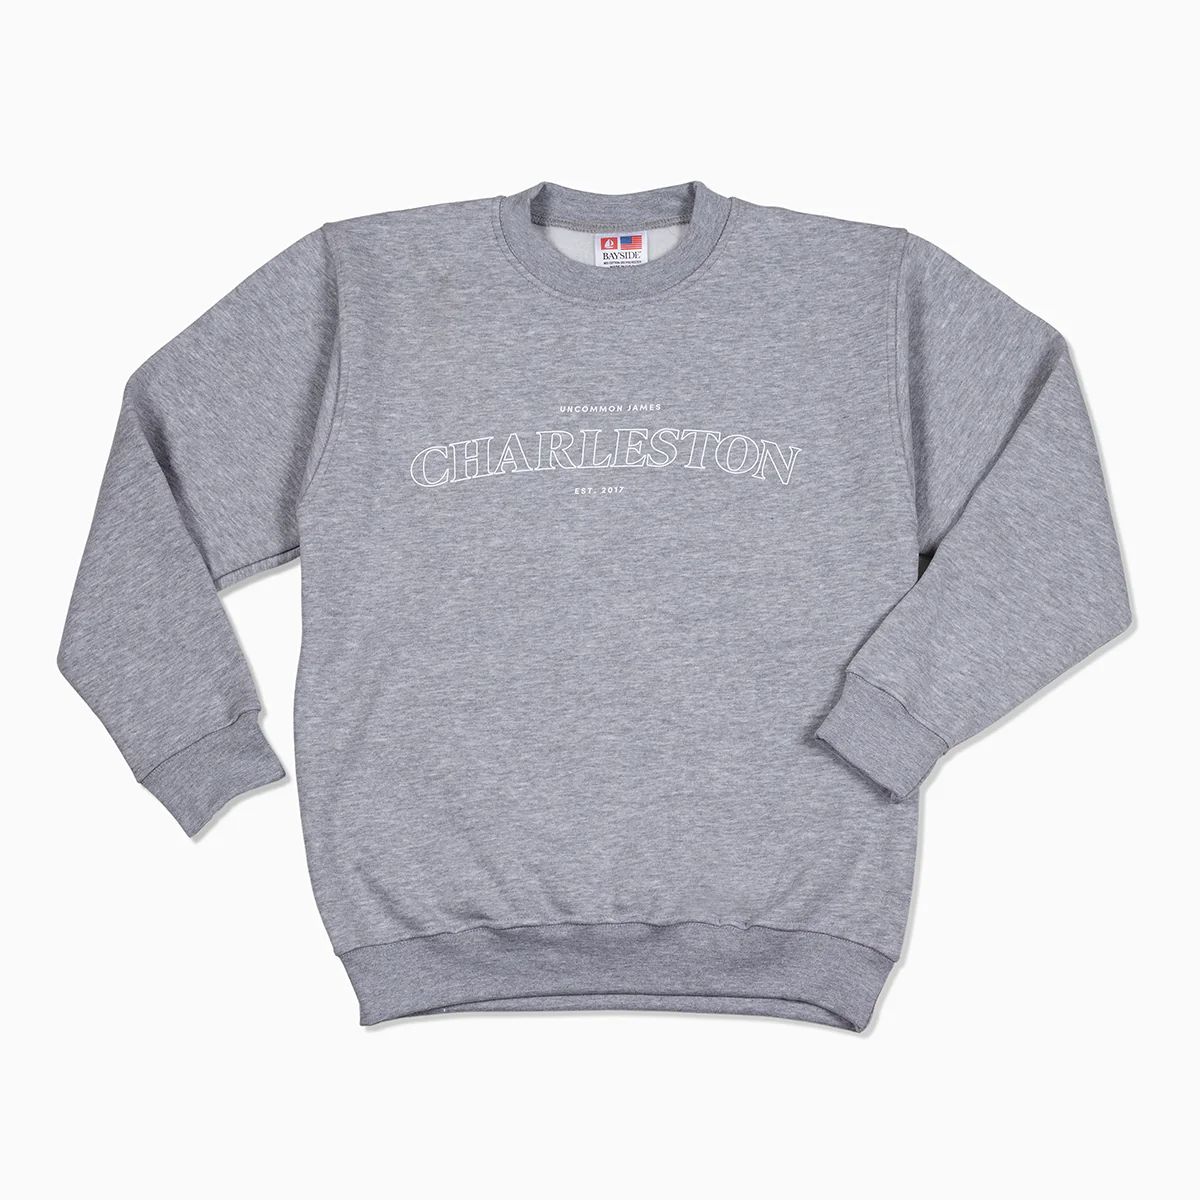 Charleston Crewneck Sweatshirt in Black and Ash | Uncommon Lifestyle | Uncommon James